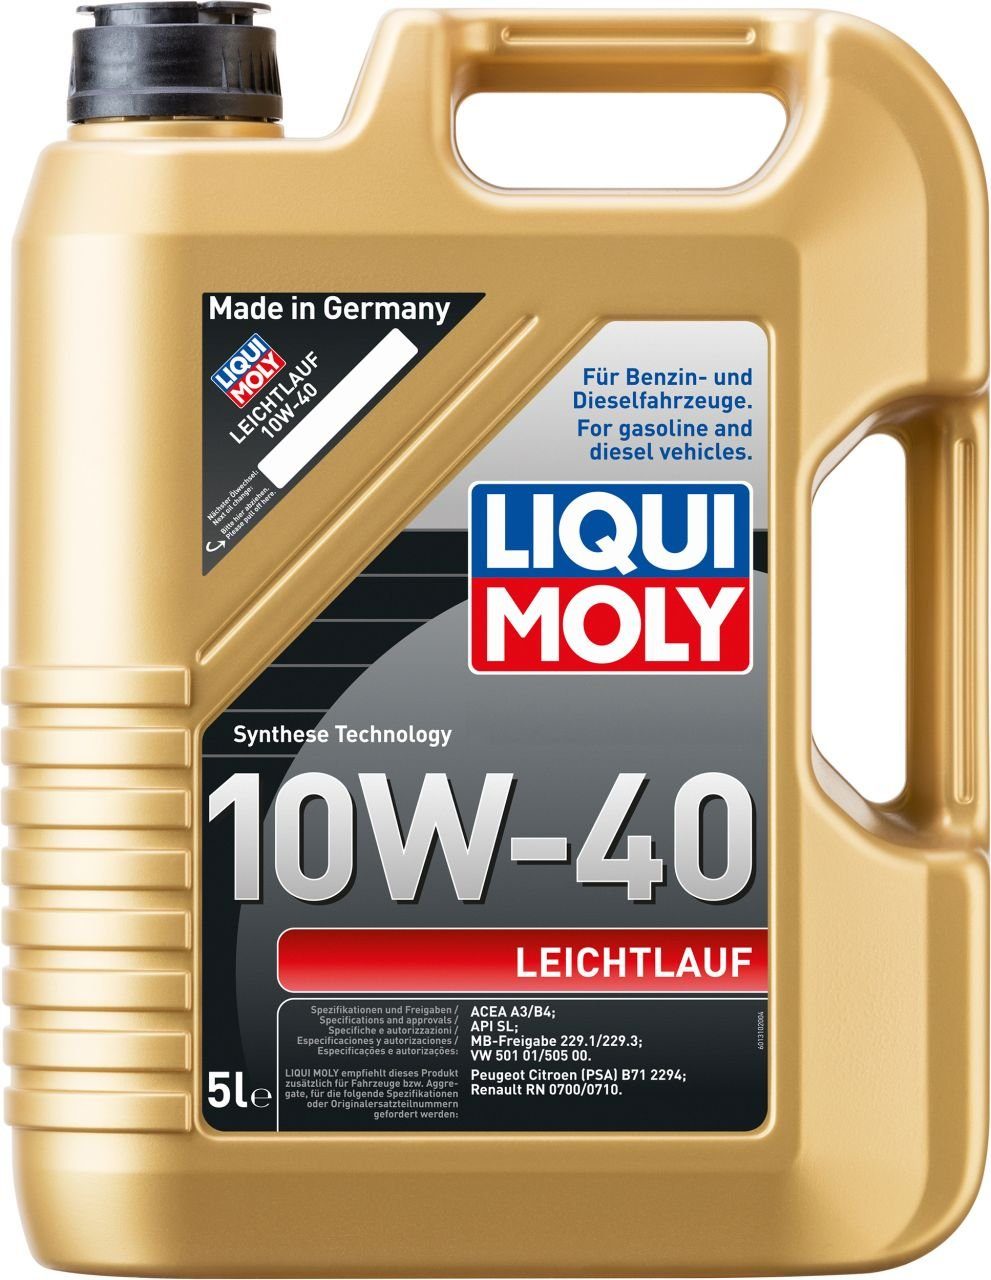 Liqui Moly Universalöl Liqui Moly Motoröl Leichtlauf 10W-40 5 L